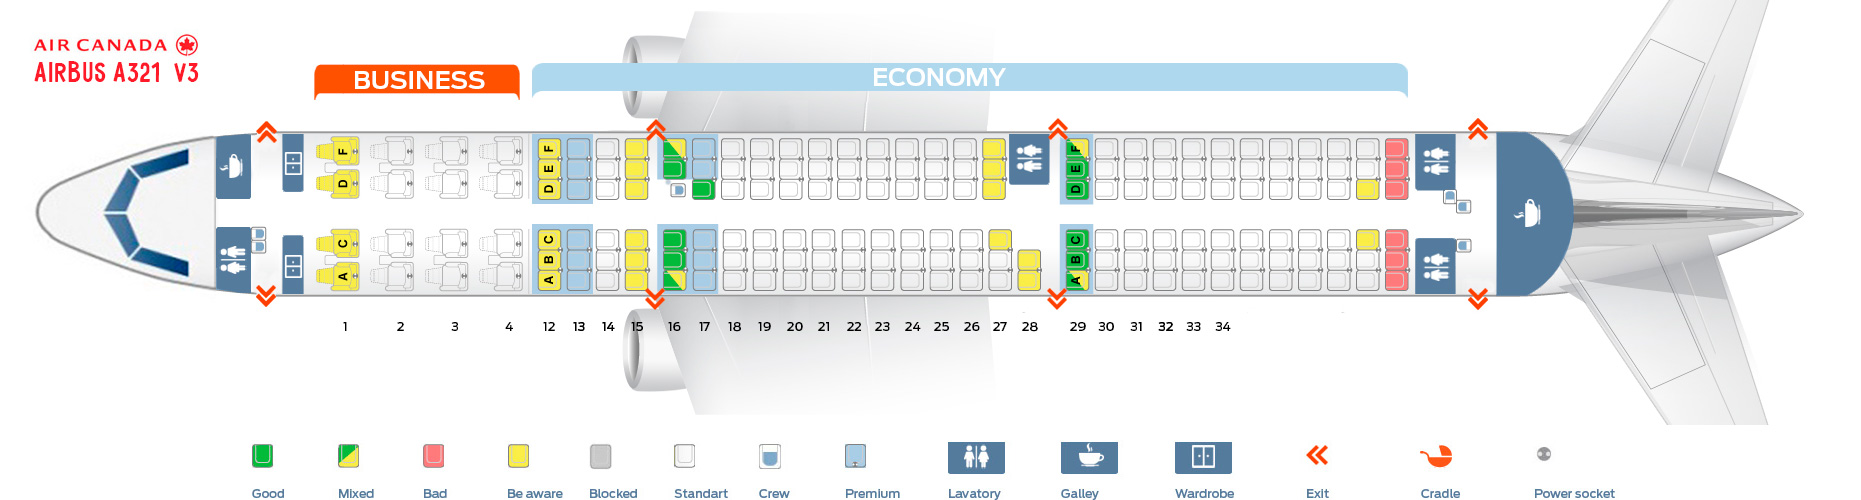 Seat map Airbus A321-200 Air Canada 